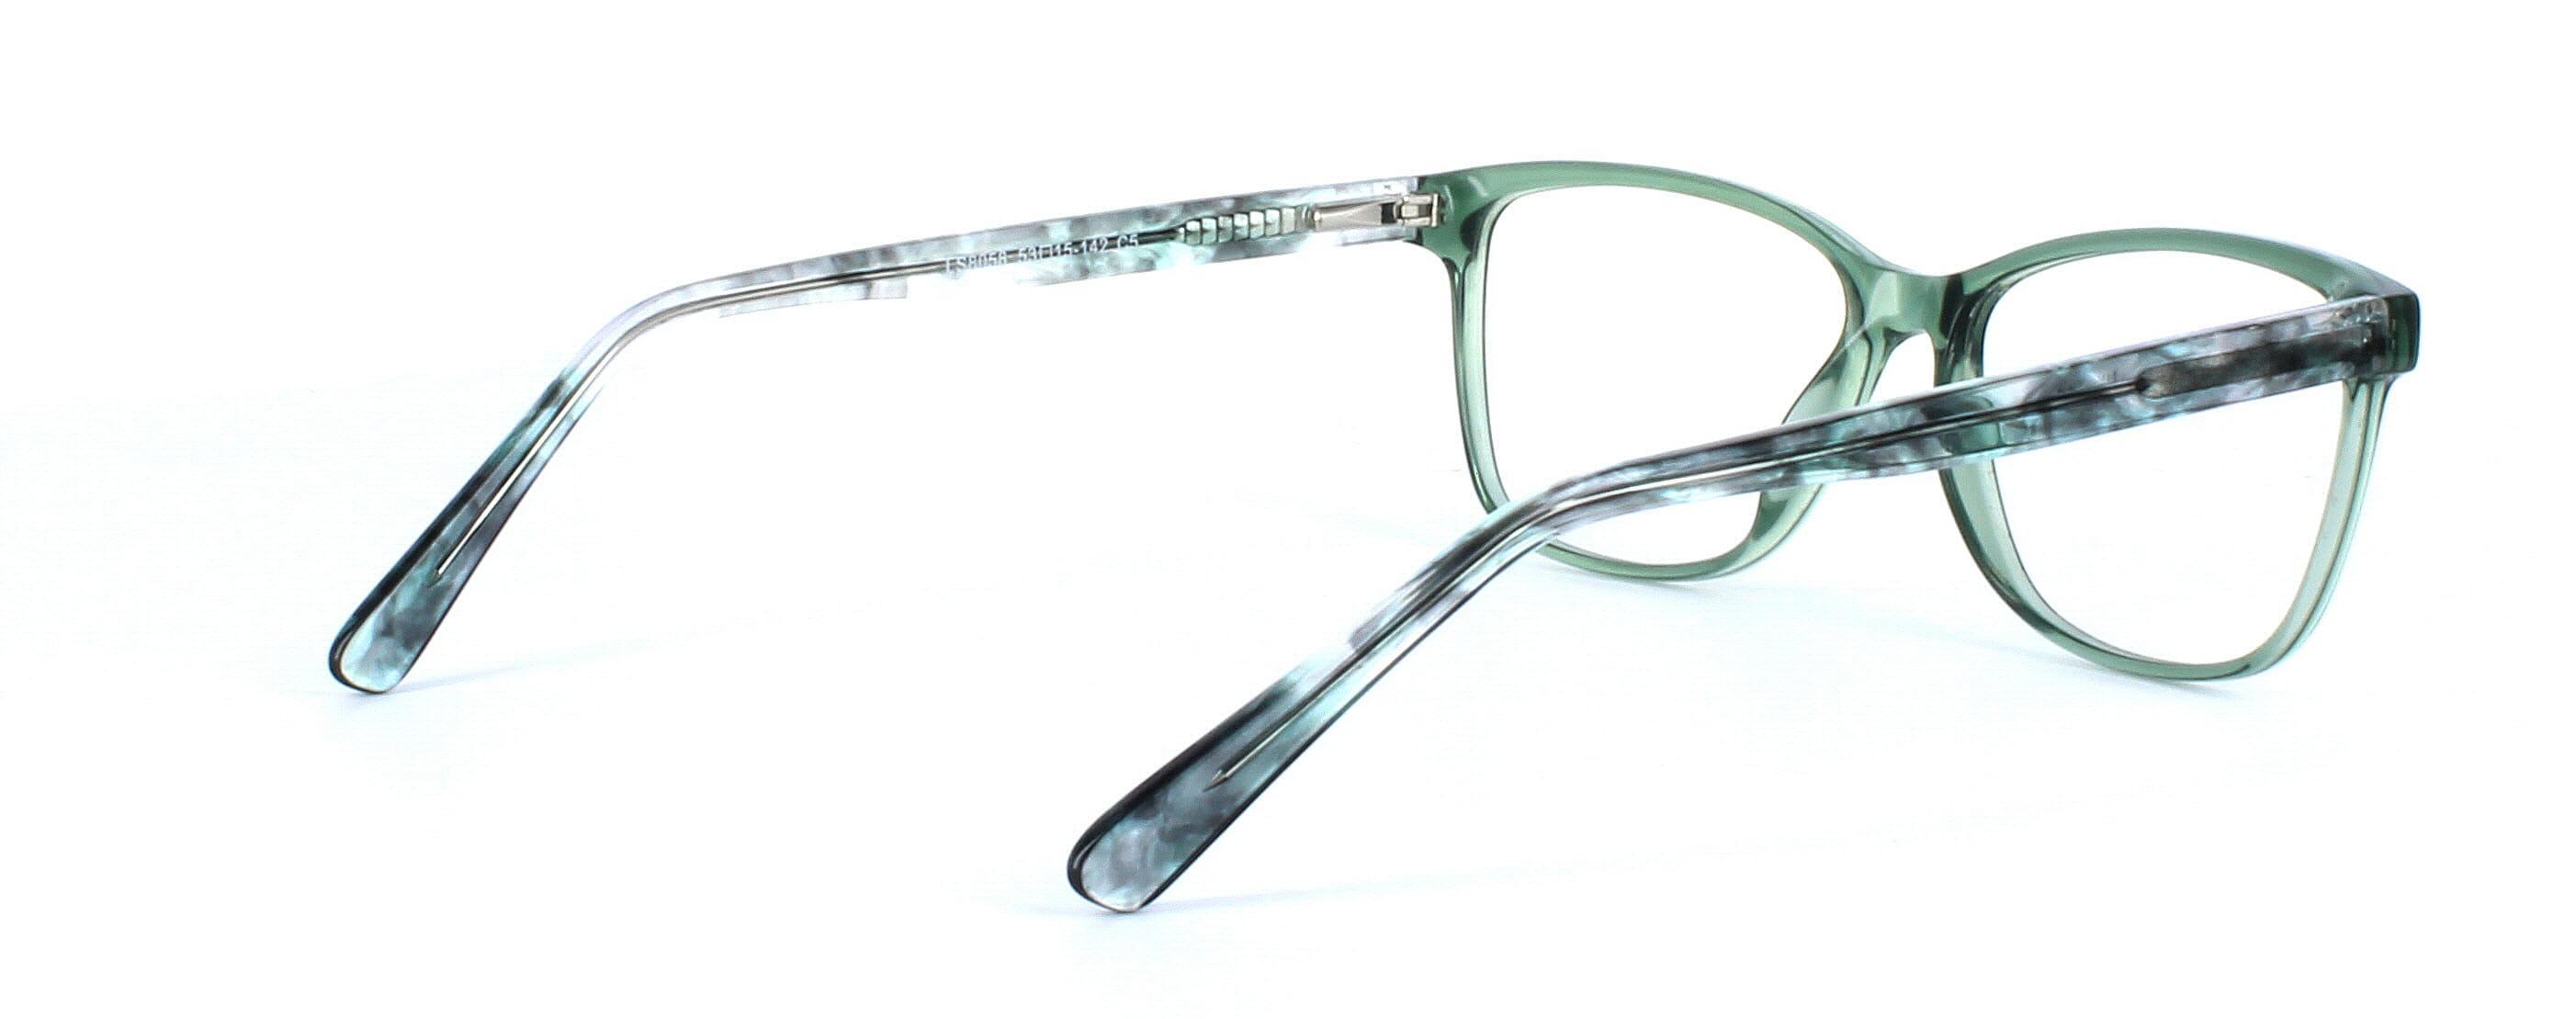 Eris - Ladies plastic rectangular shaped glasses frame - crystal green - image view 4